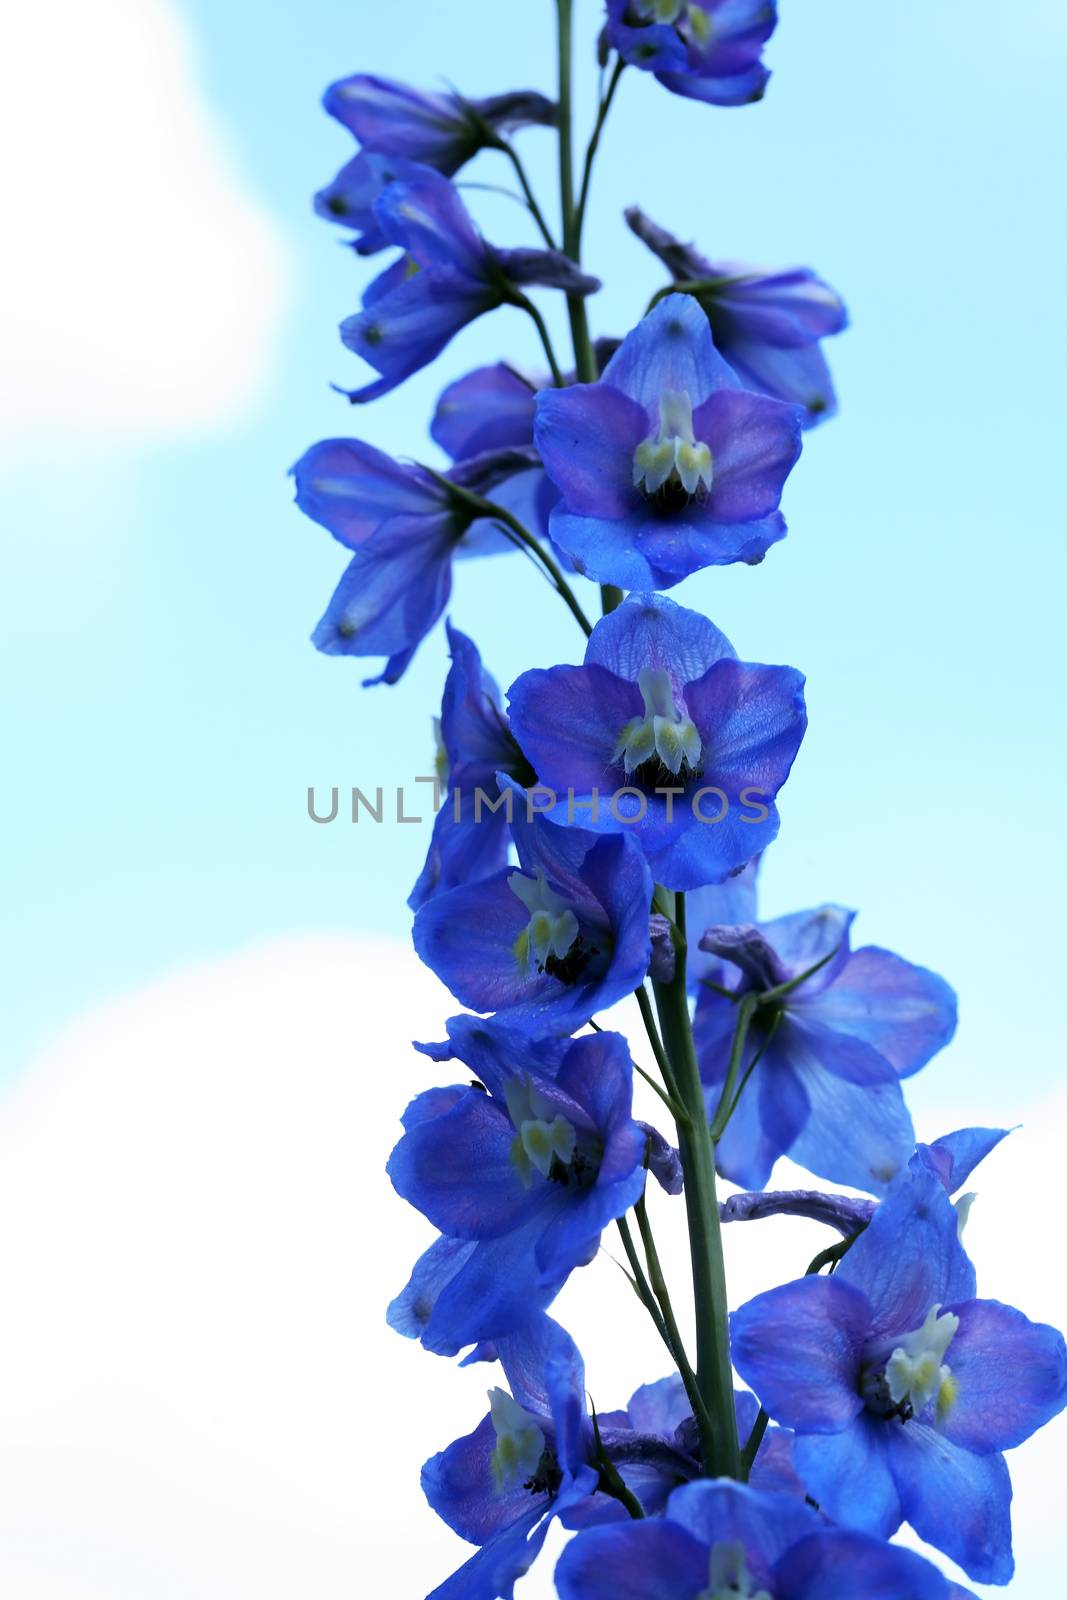 Nice Blue Flower by kvkirillov